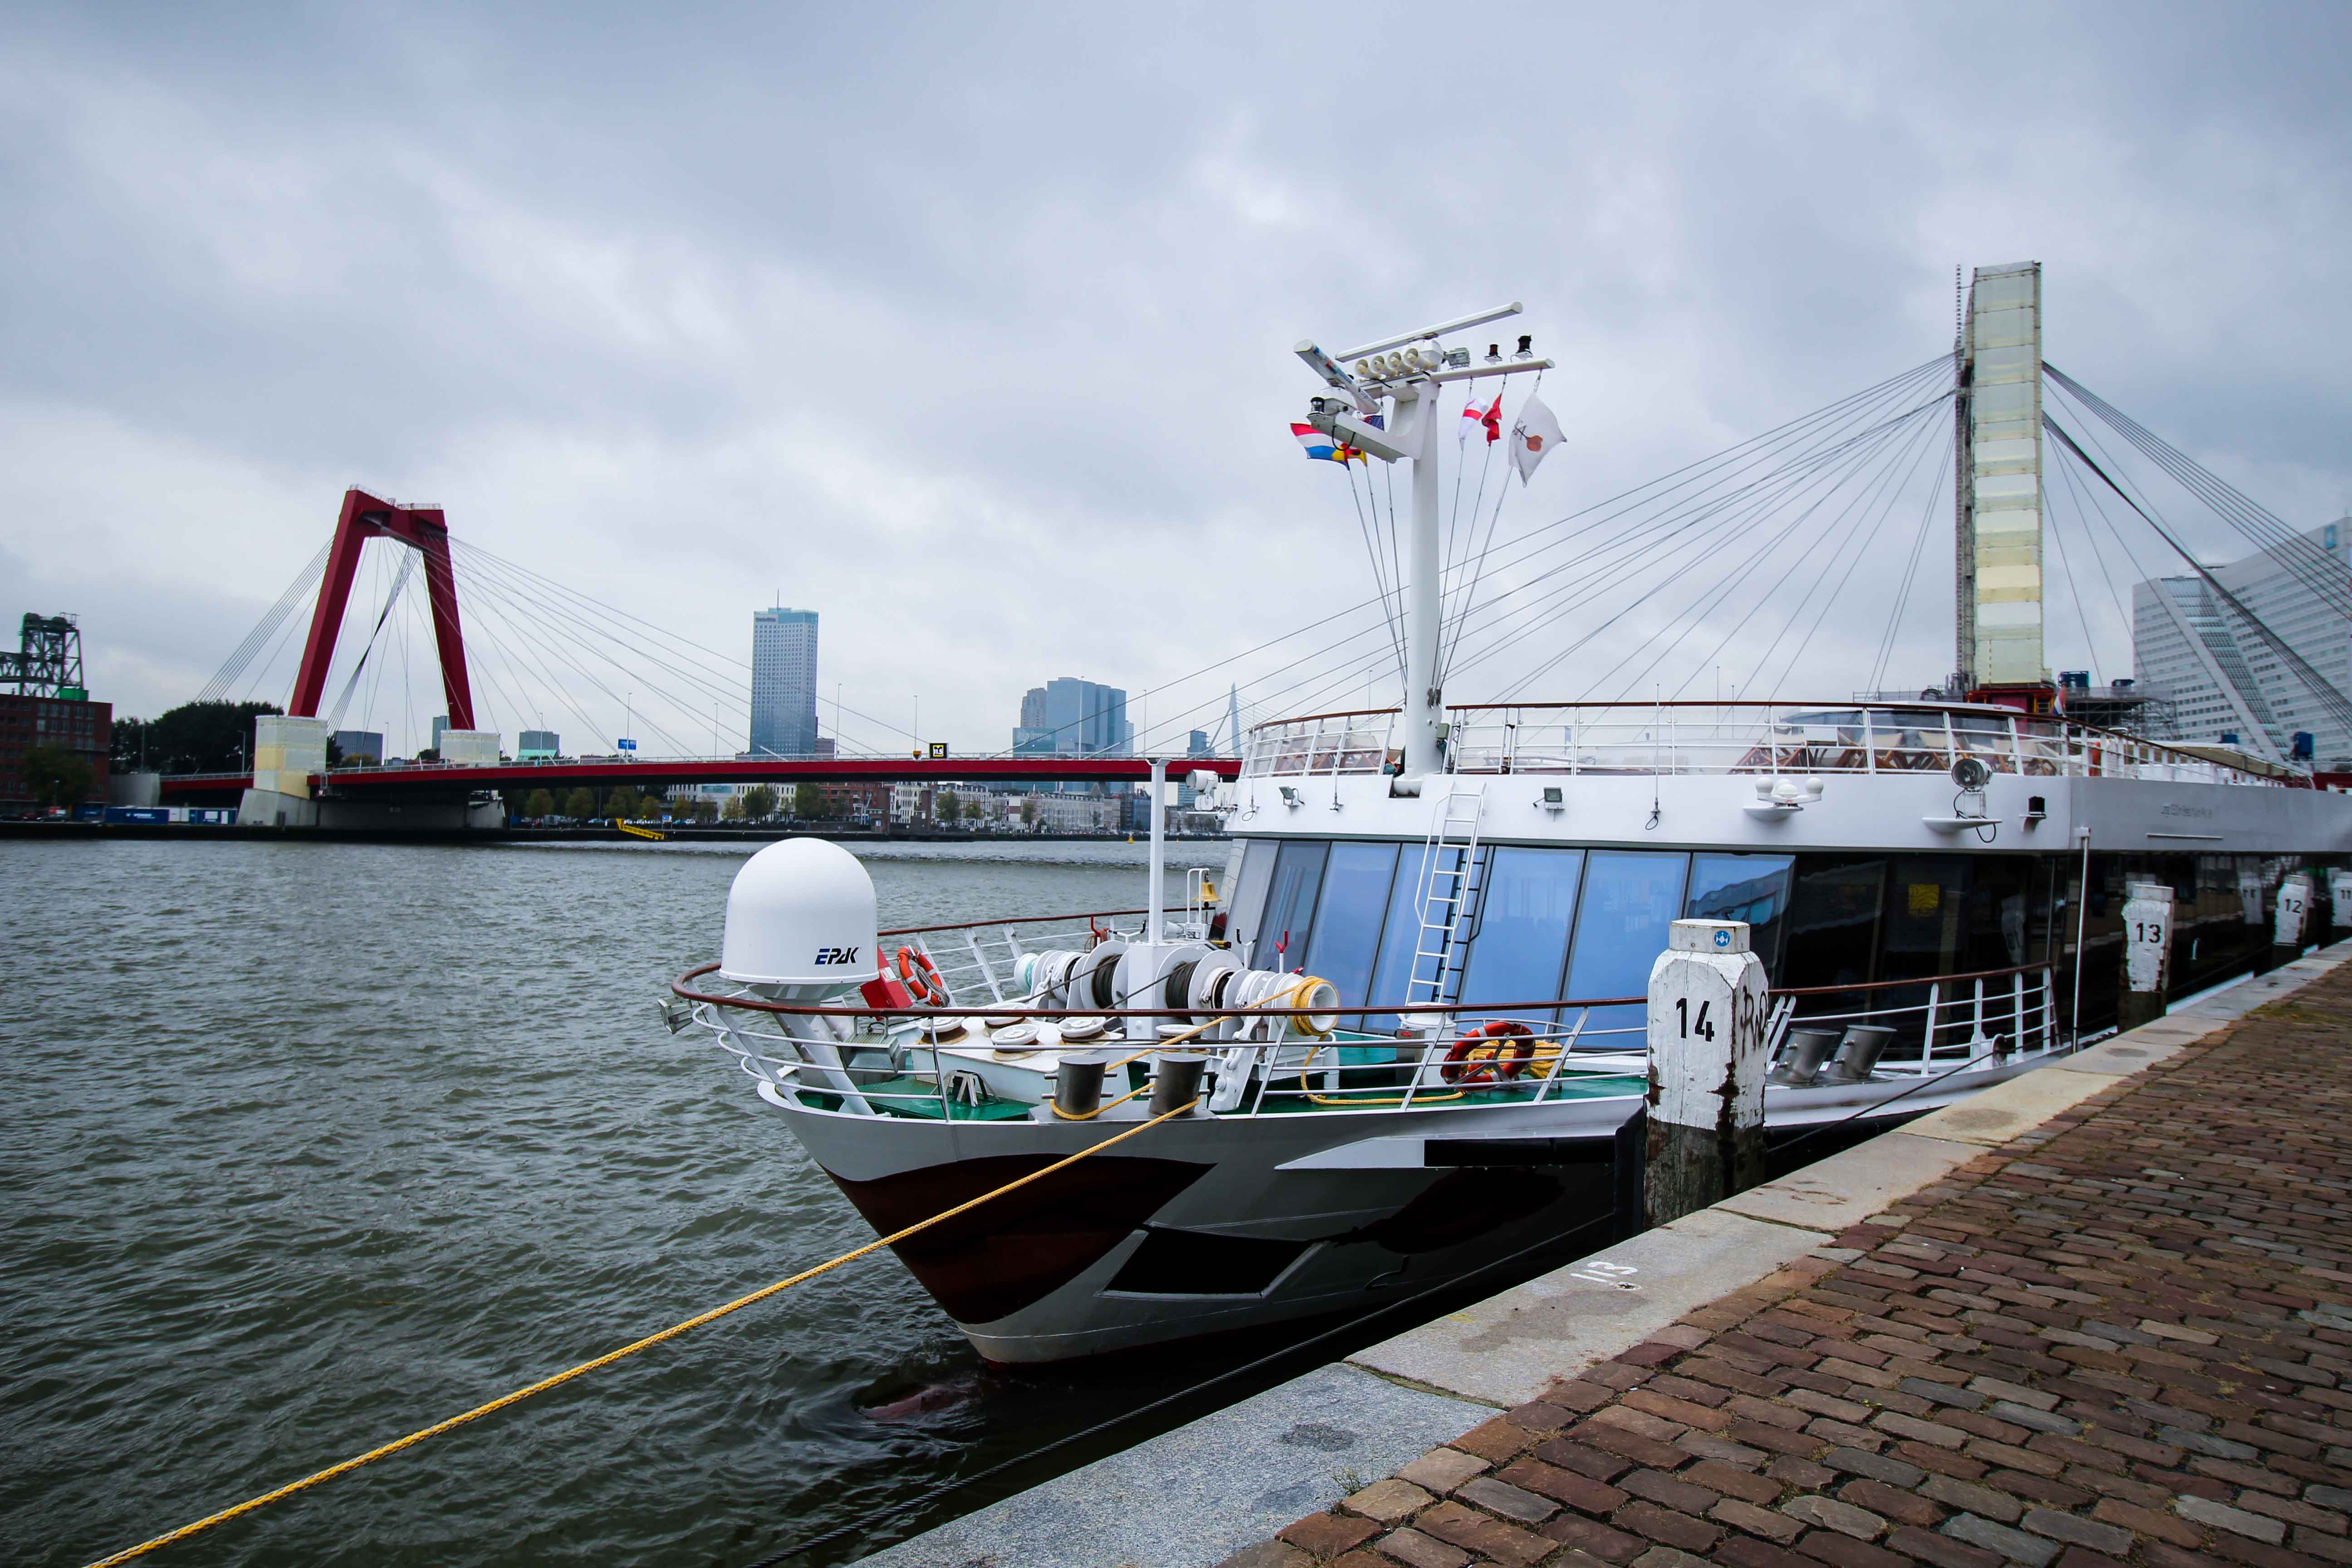 Rotterdam Flusskreuzfahrt A-ROSA SILVA Kreuzfahrtschiff Rhein Erlebnis Kurs Amsterdam Erfahrung Flusskreuzfahrt Reiseblog